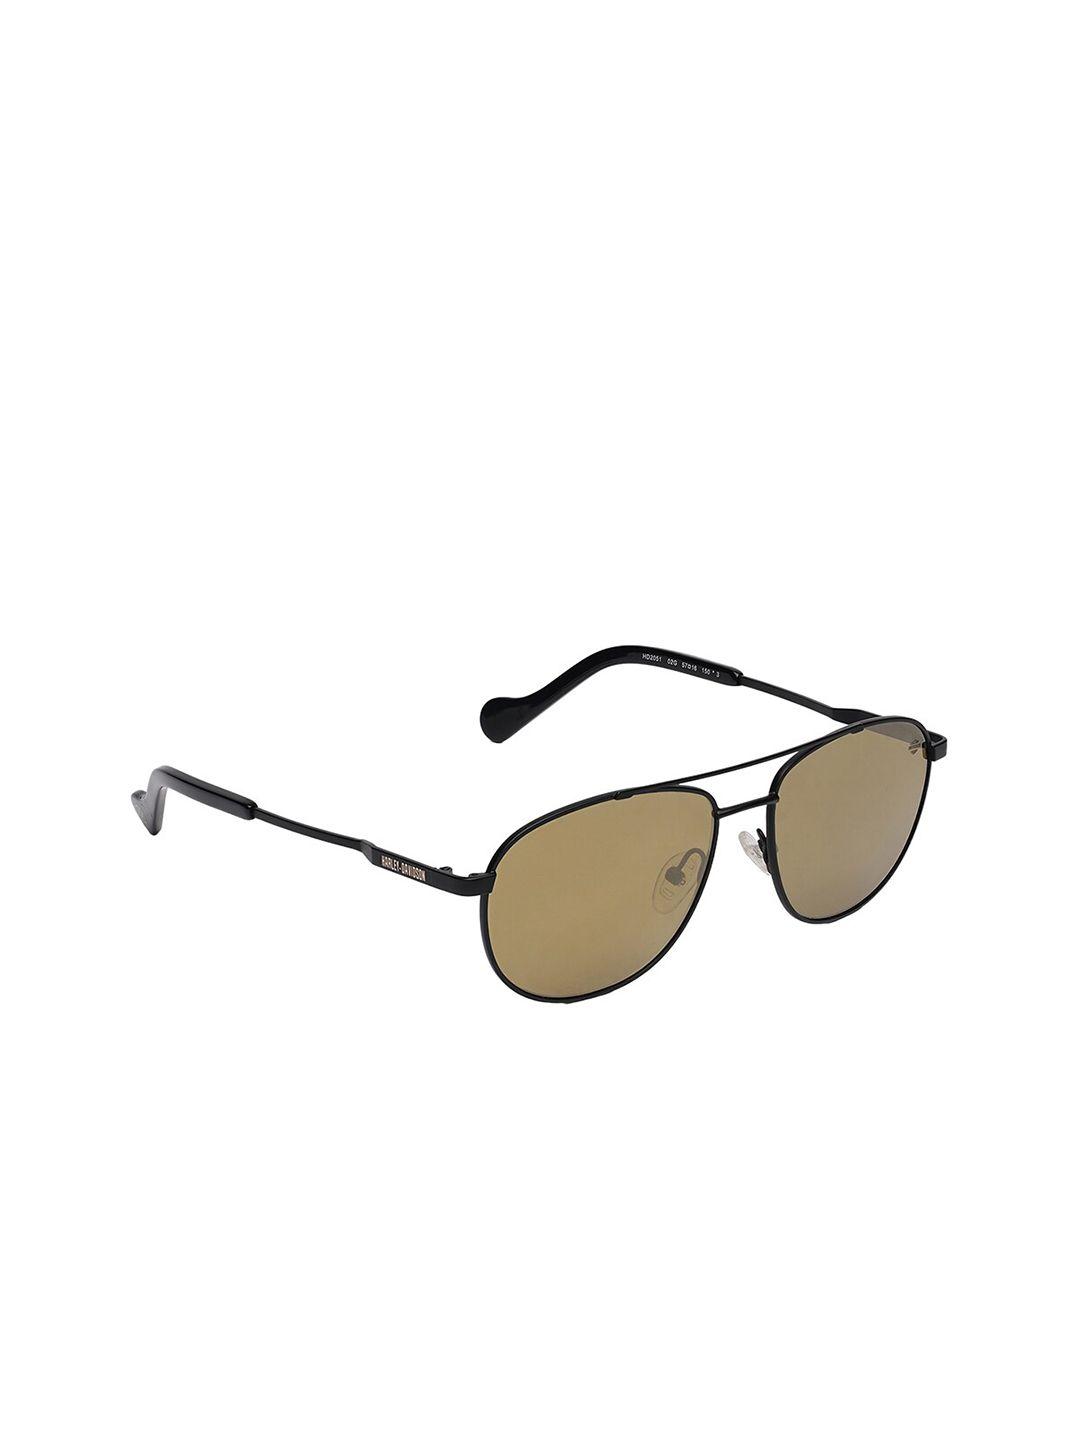 harley-davidson men aviator sunglasses with uv protected lens